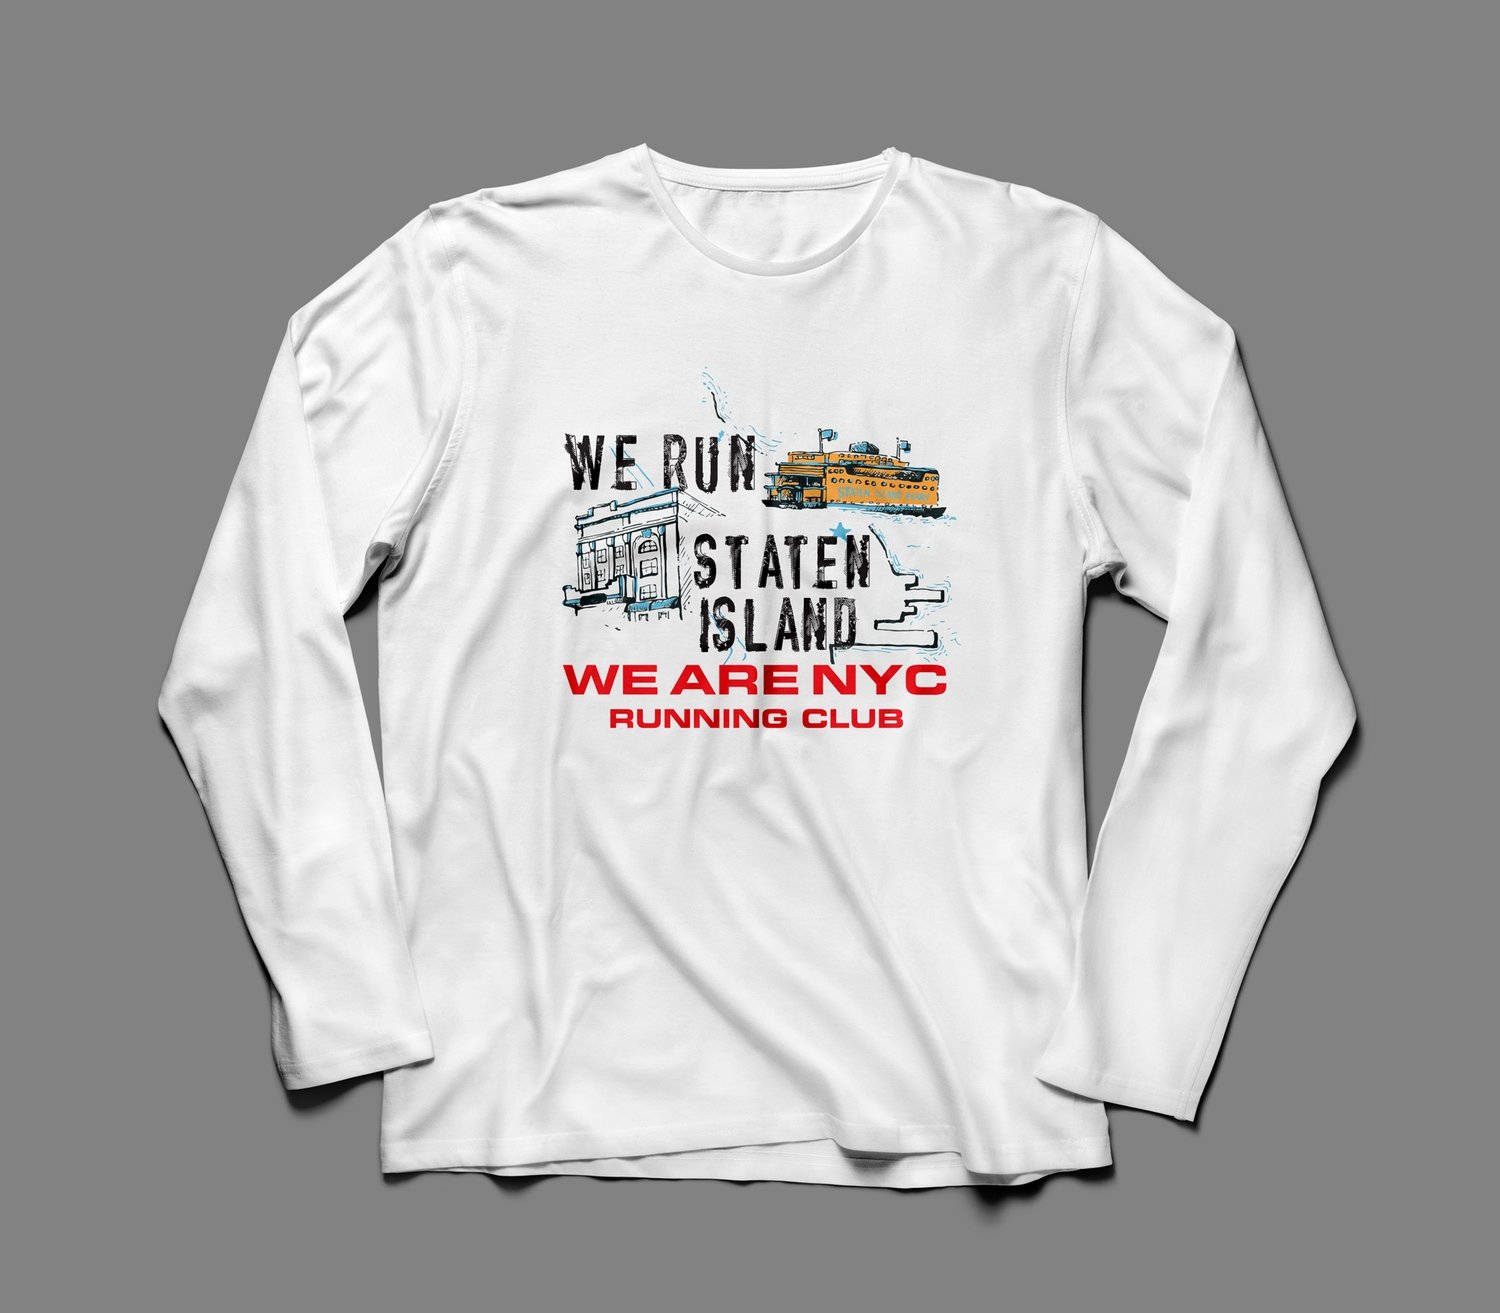 WE ARE NYC STATEN ISLAND "ICONIC" LONG SLEEVE SHIRT